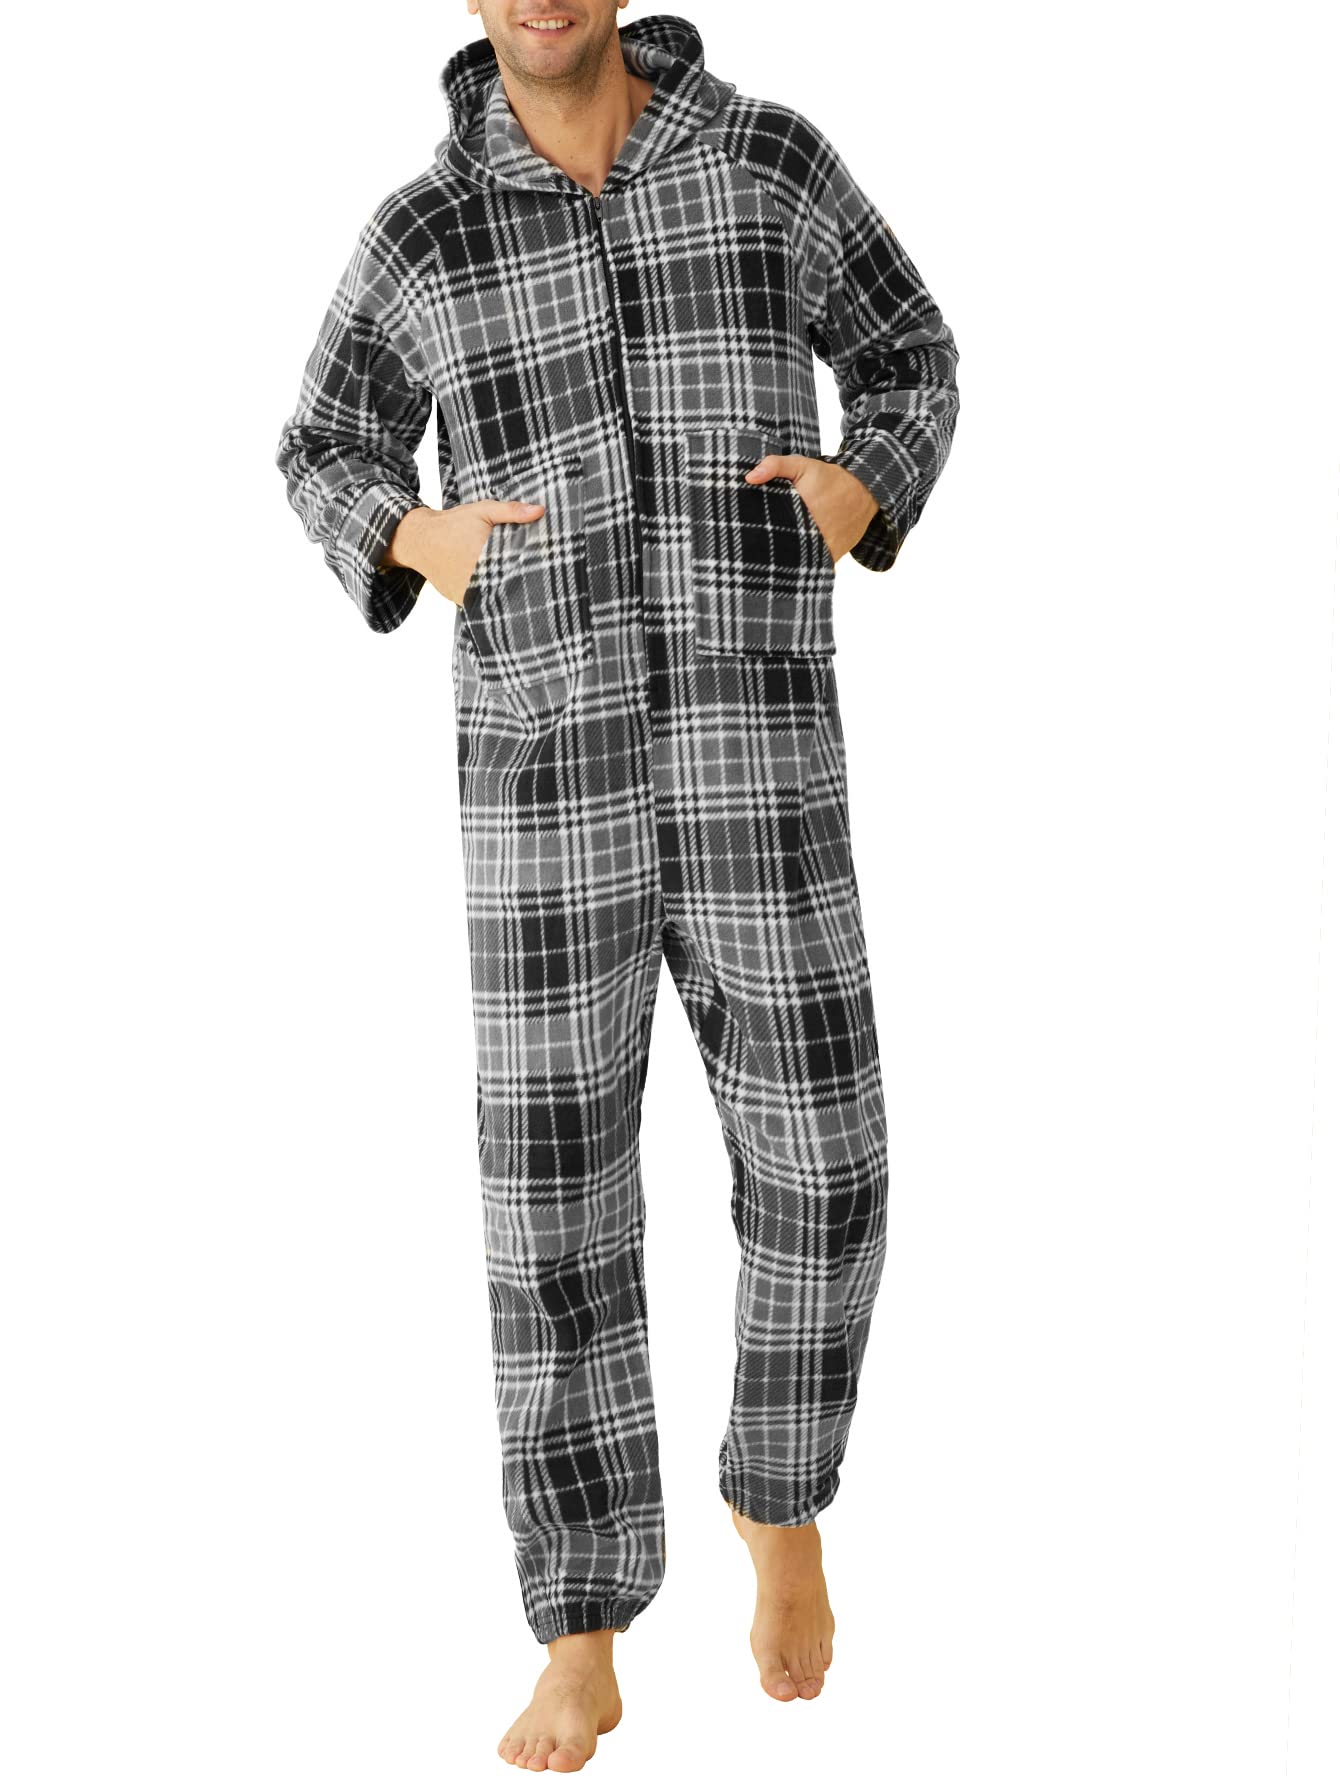 Adults Fleece Hooded Onesie Pajamas for Men - Latuza